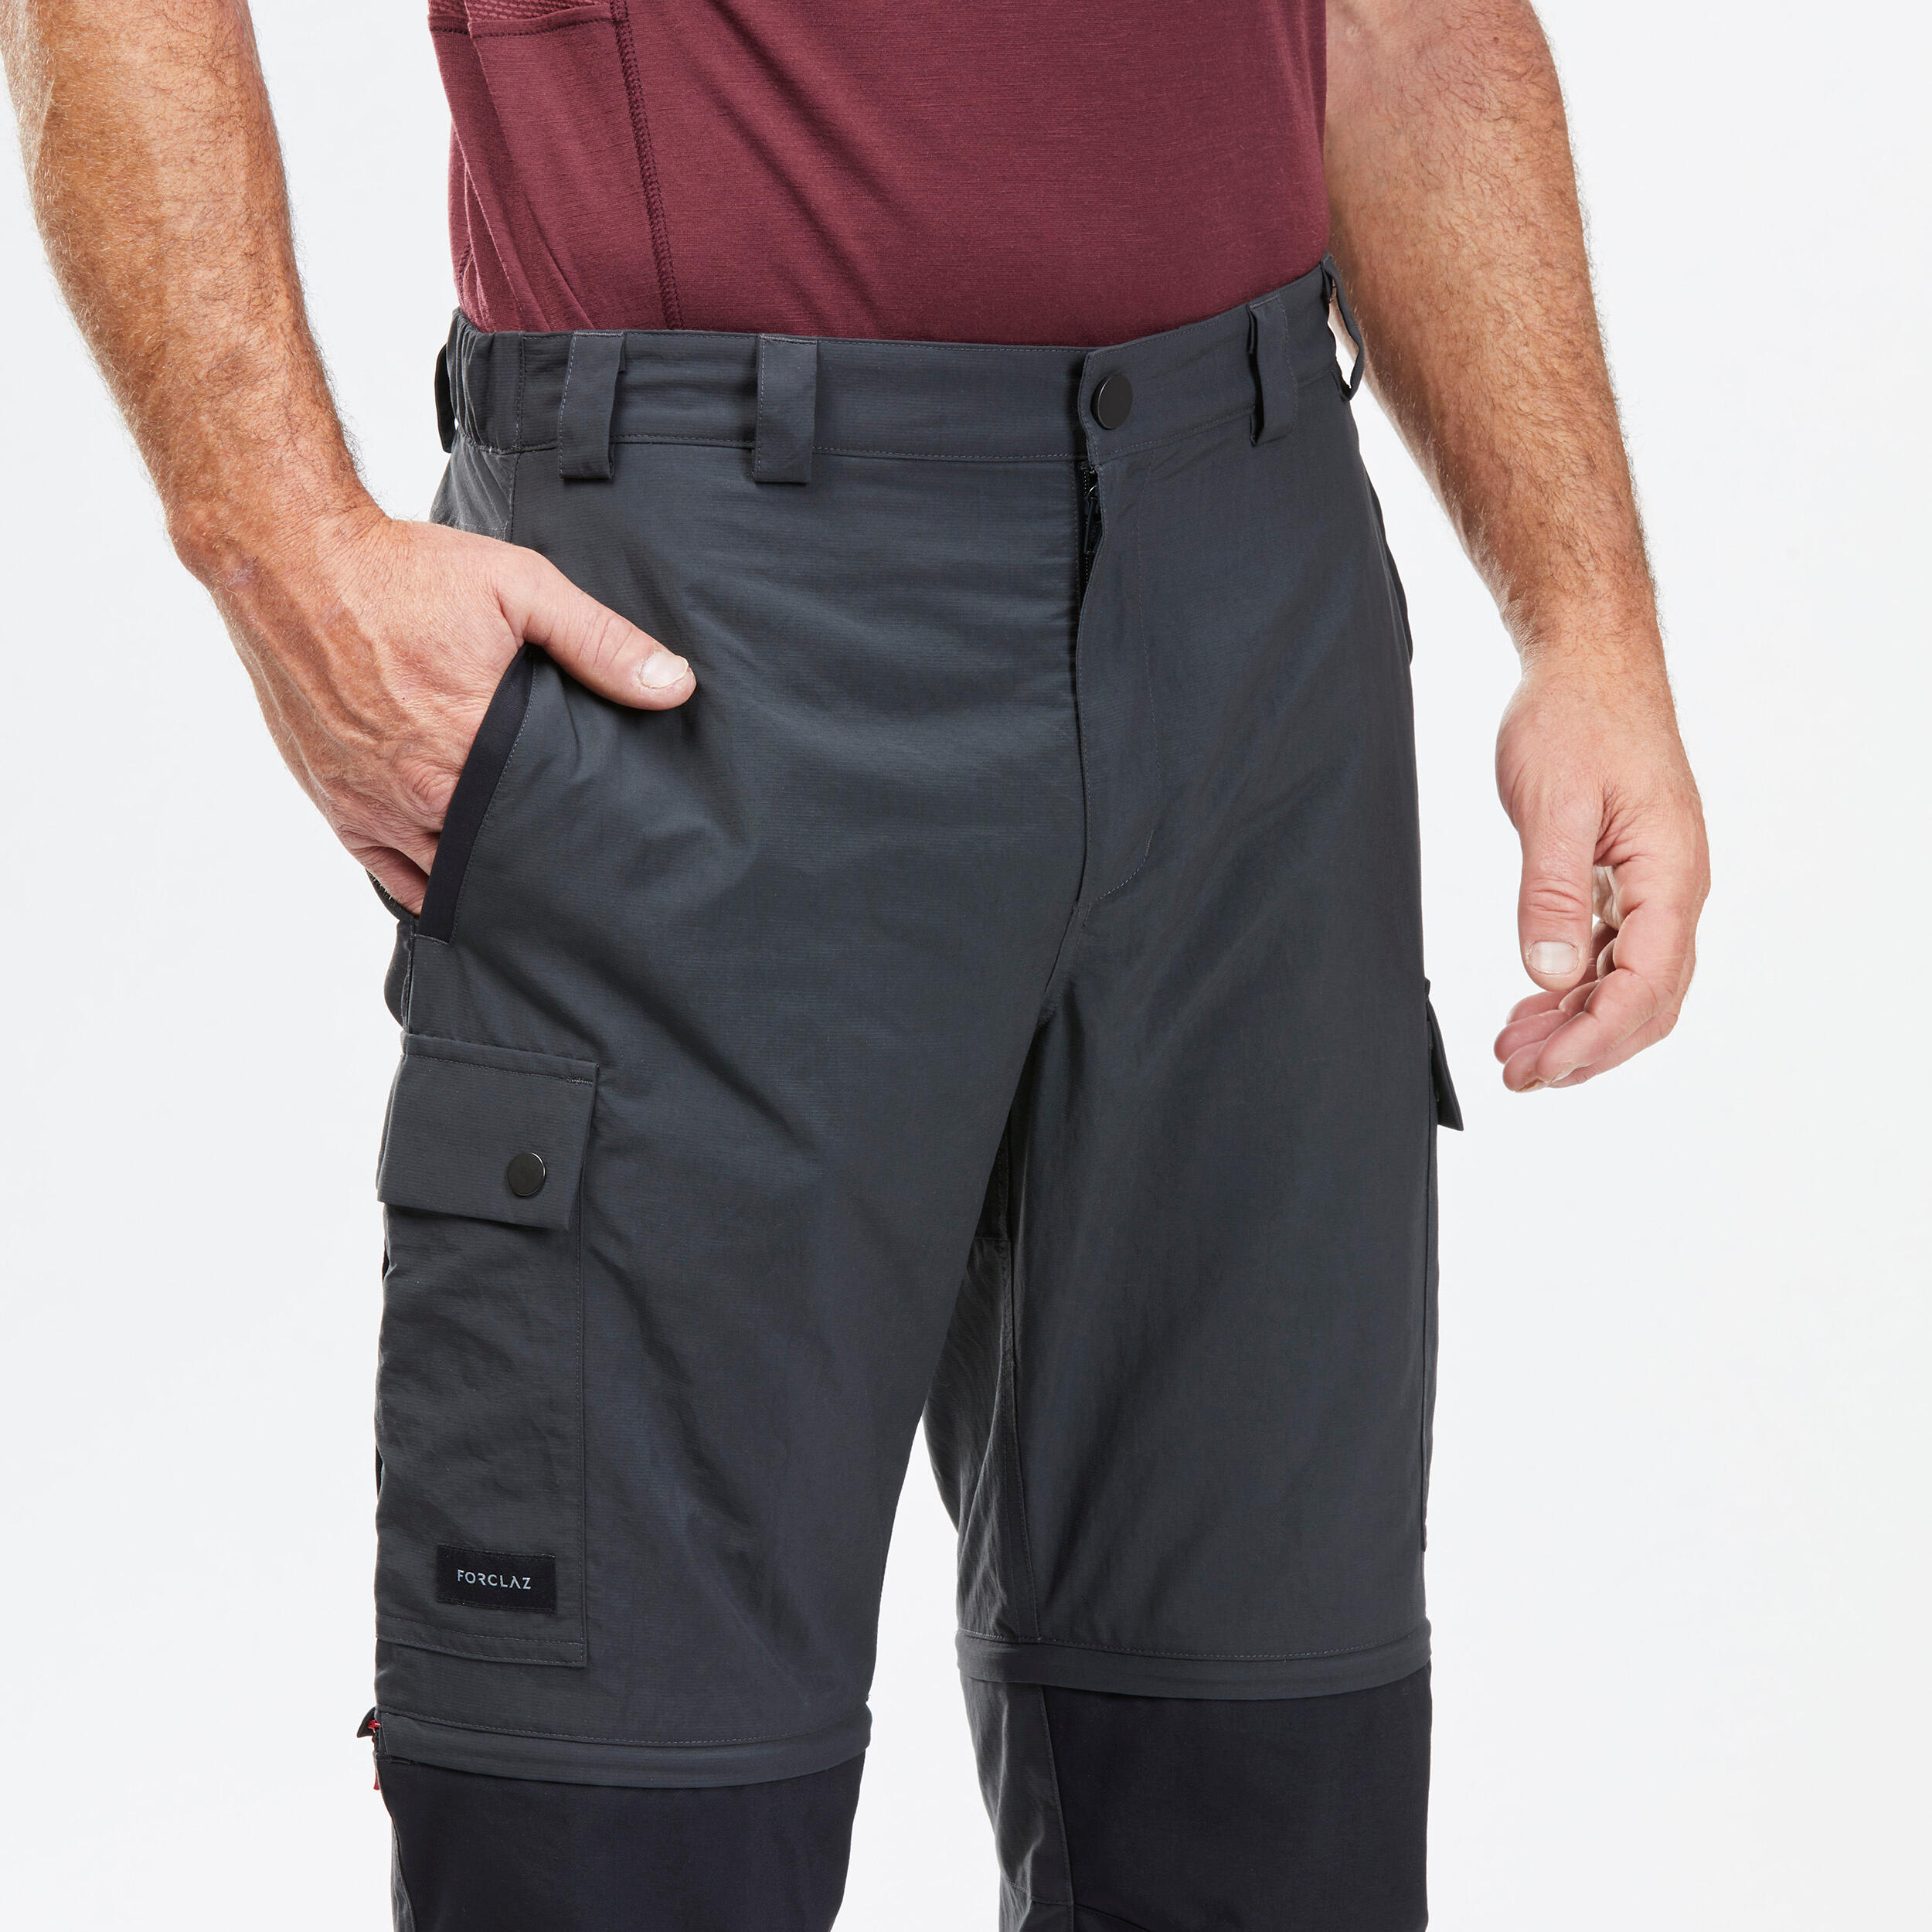 Karrimor  Zip Off Trousers  Convertible Trousers  SportsDirectcom